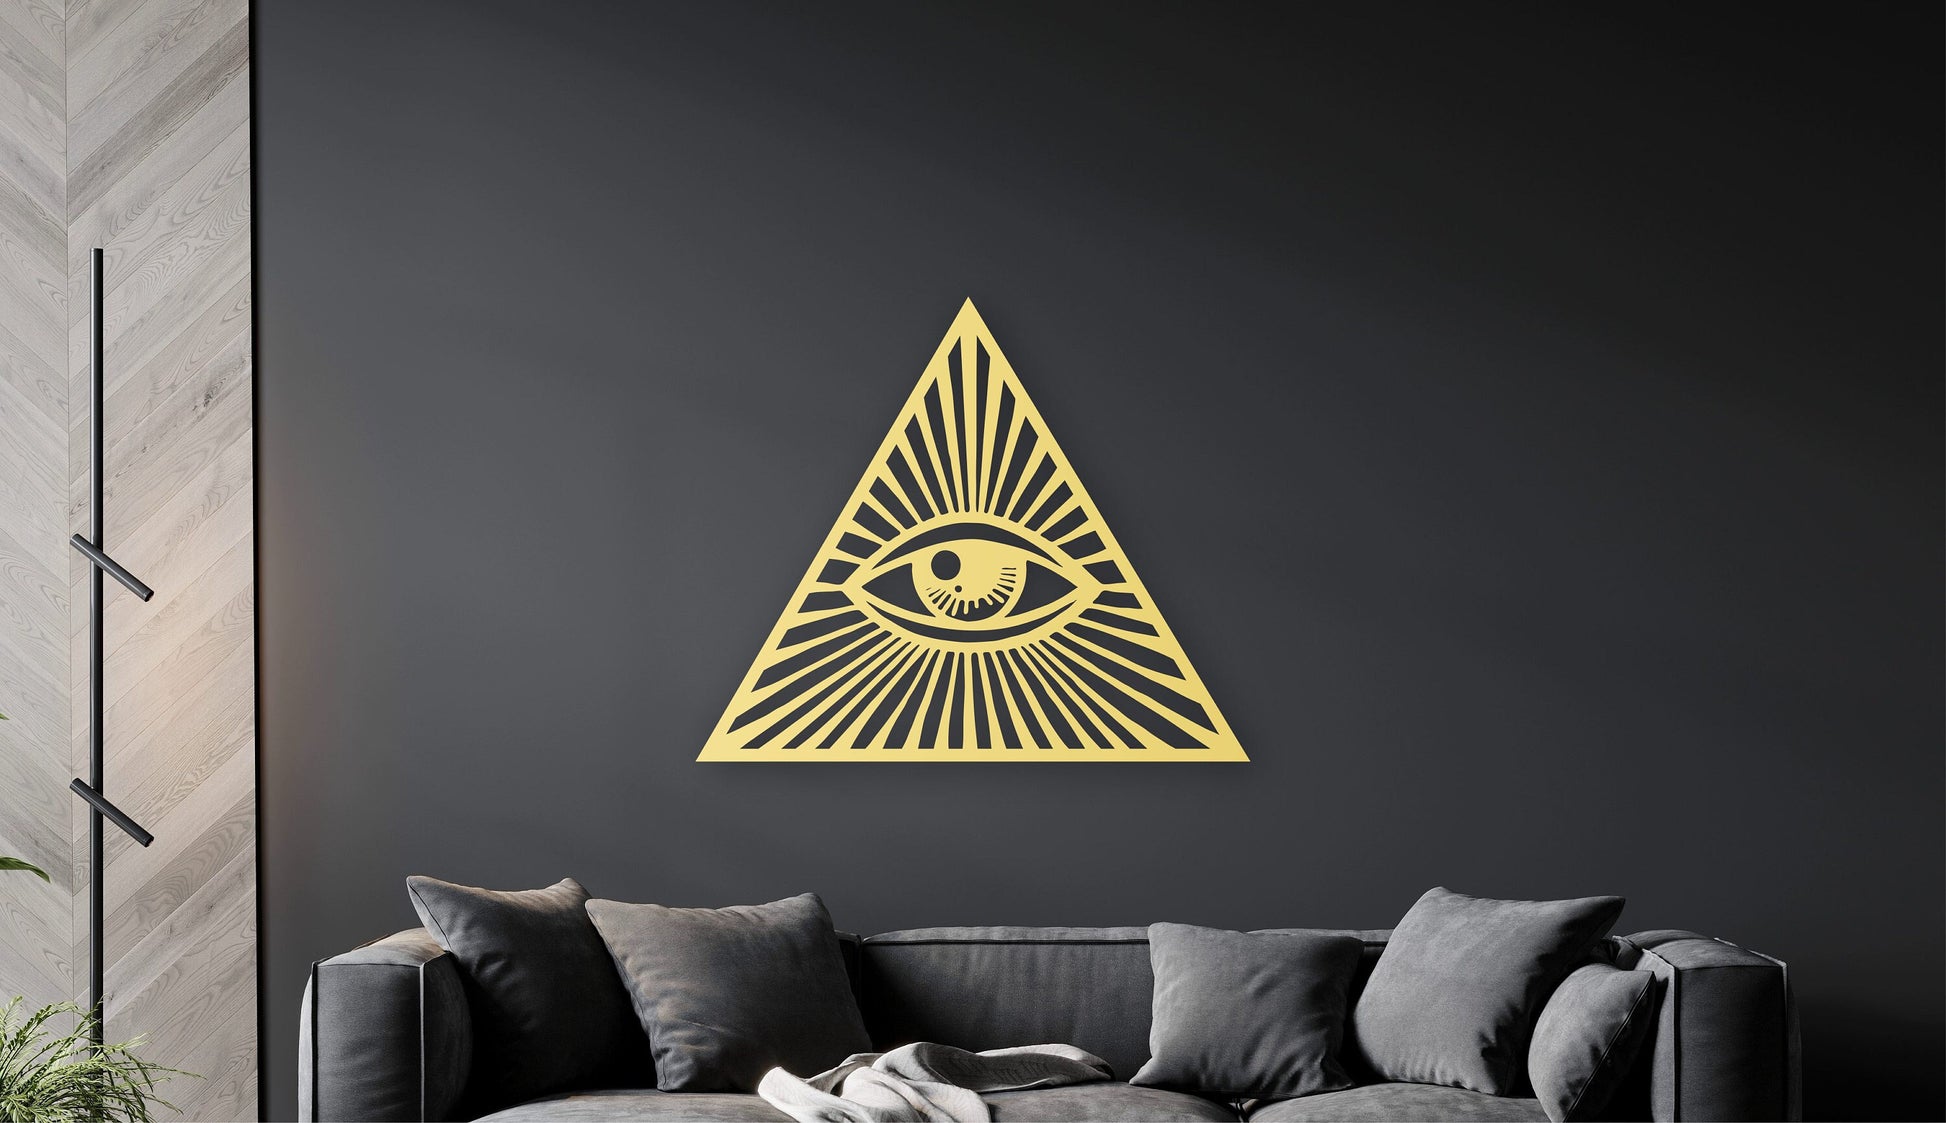 Eye of providence, masonic art, evil eye wall decor, evil eye art, occult decor, indie room decor, masonic art, evil eye home decor